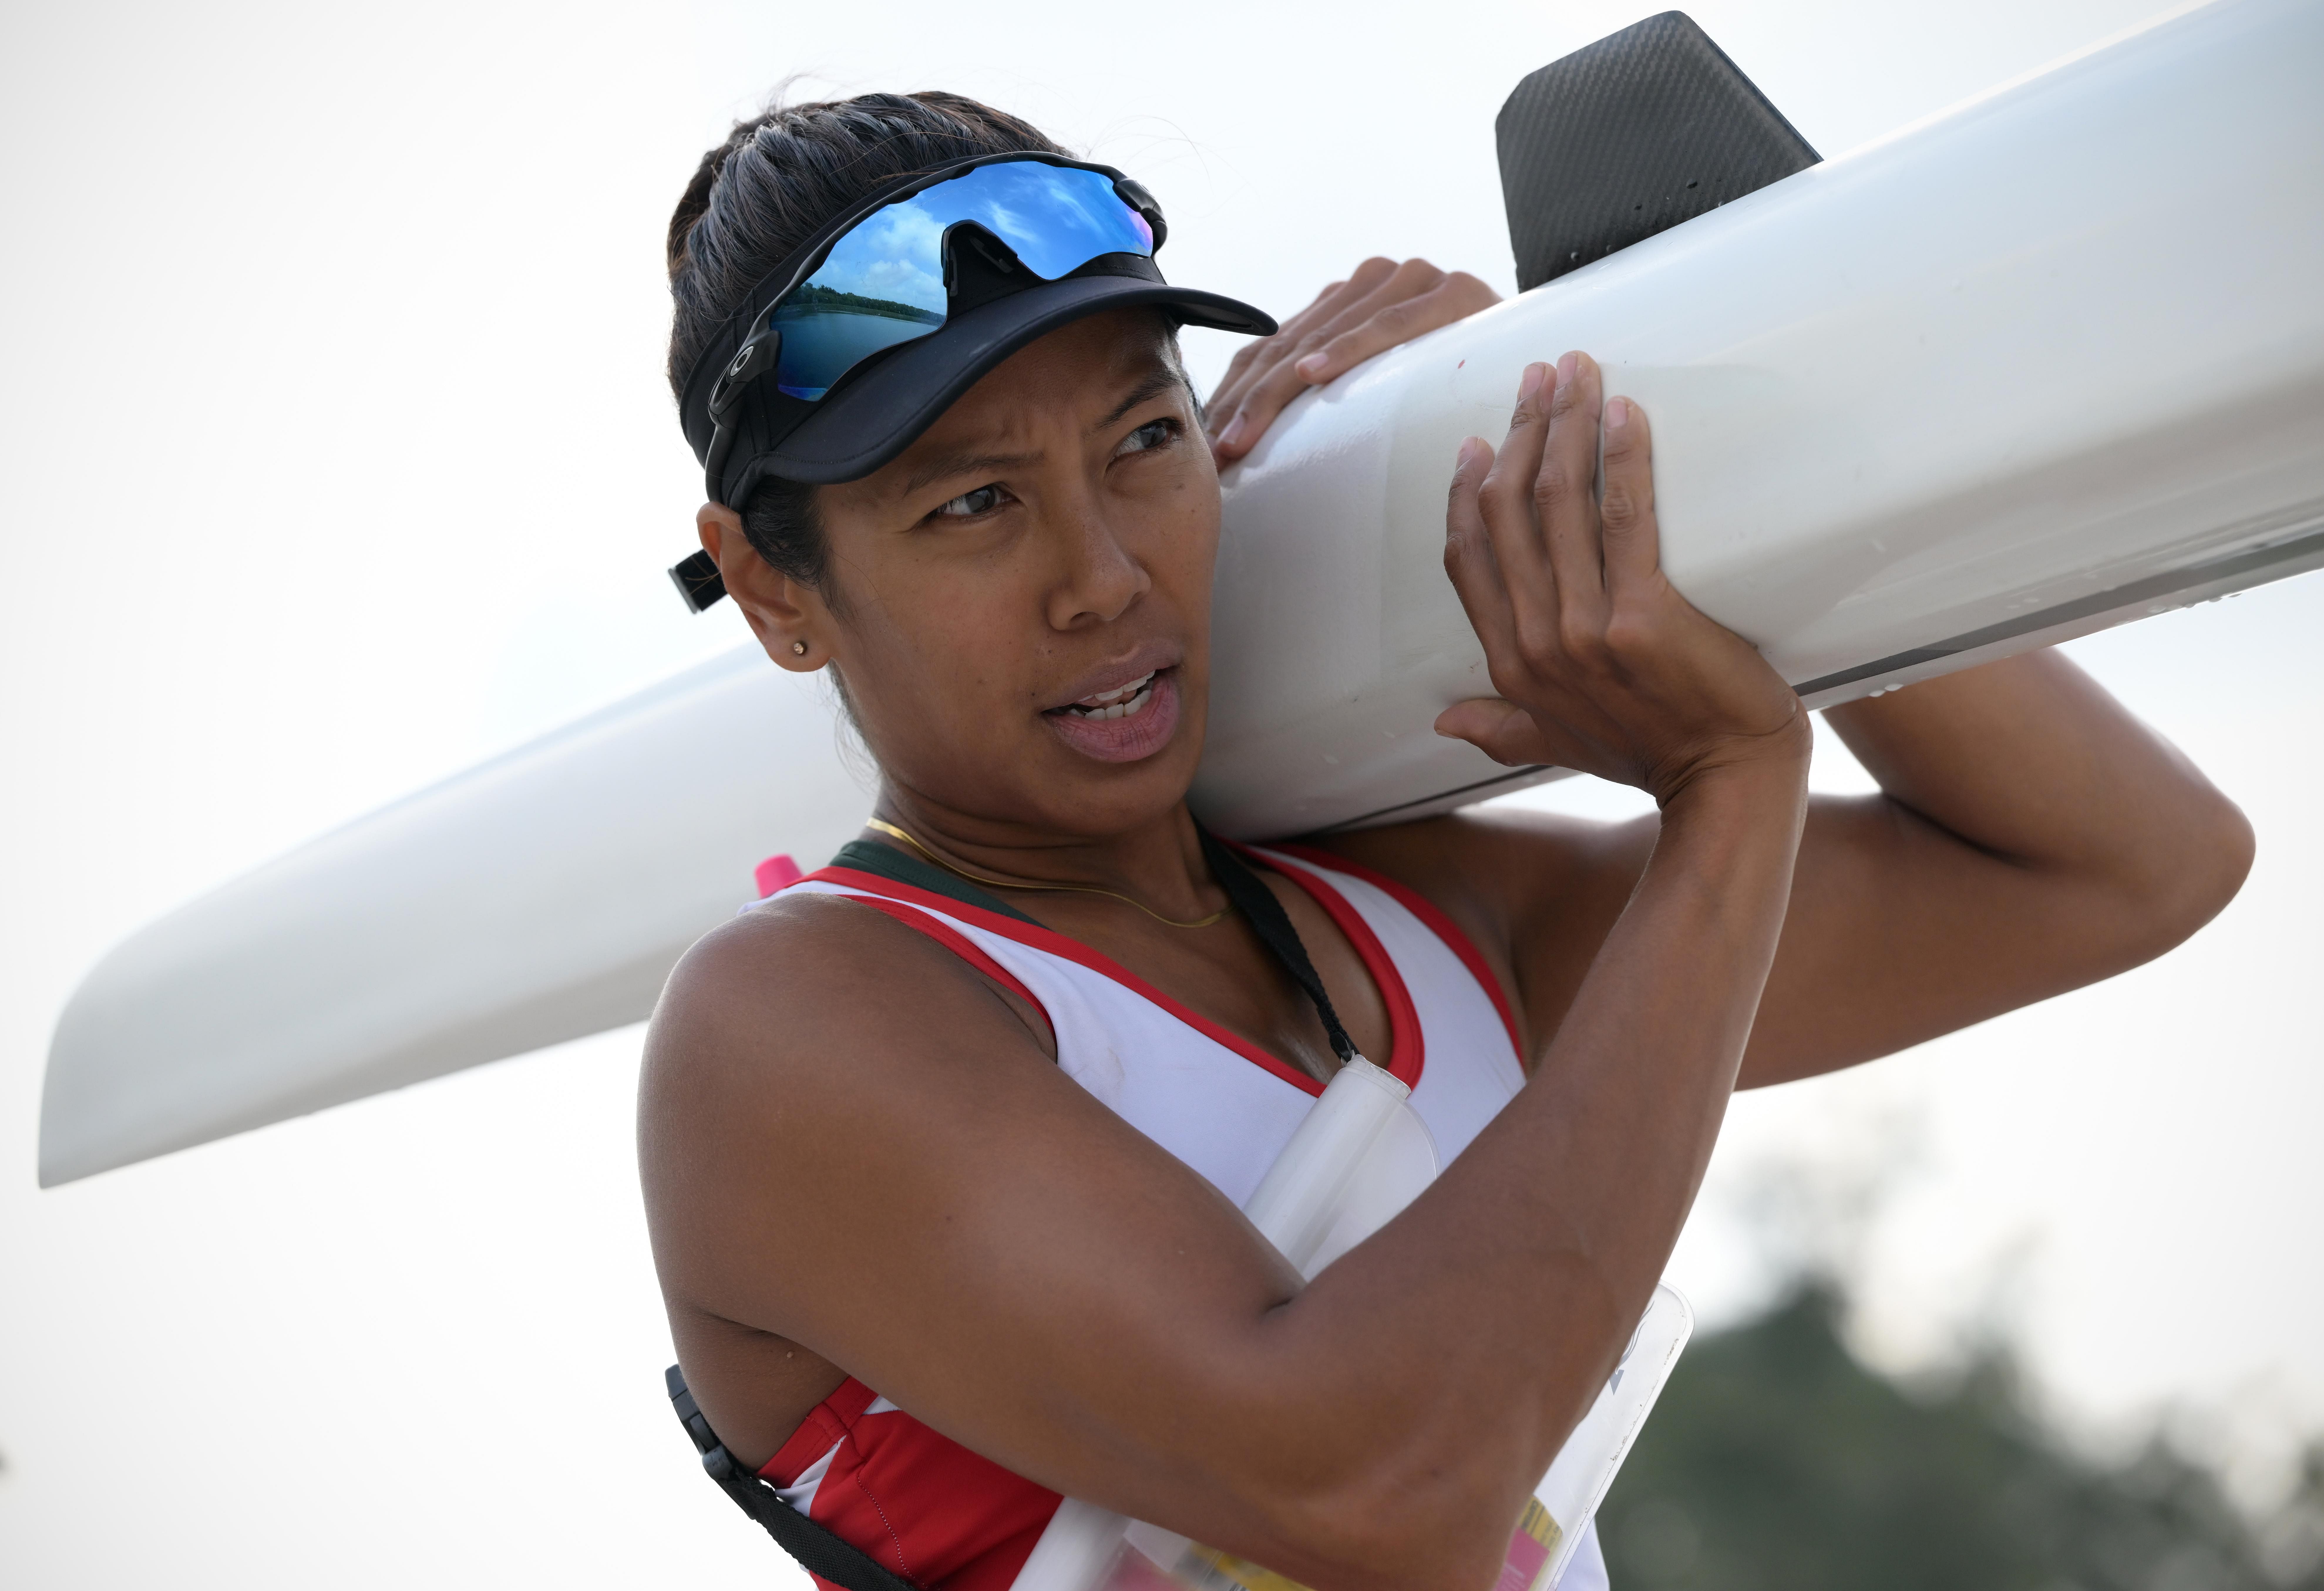 Rower Saiyidah Aisyah earns Paris Olympic berth for Singapore